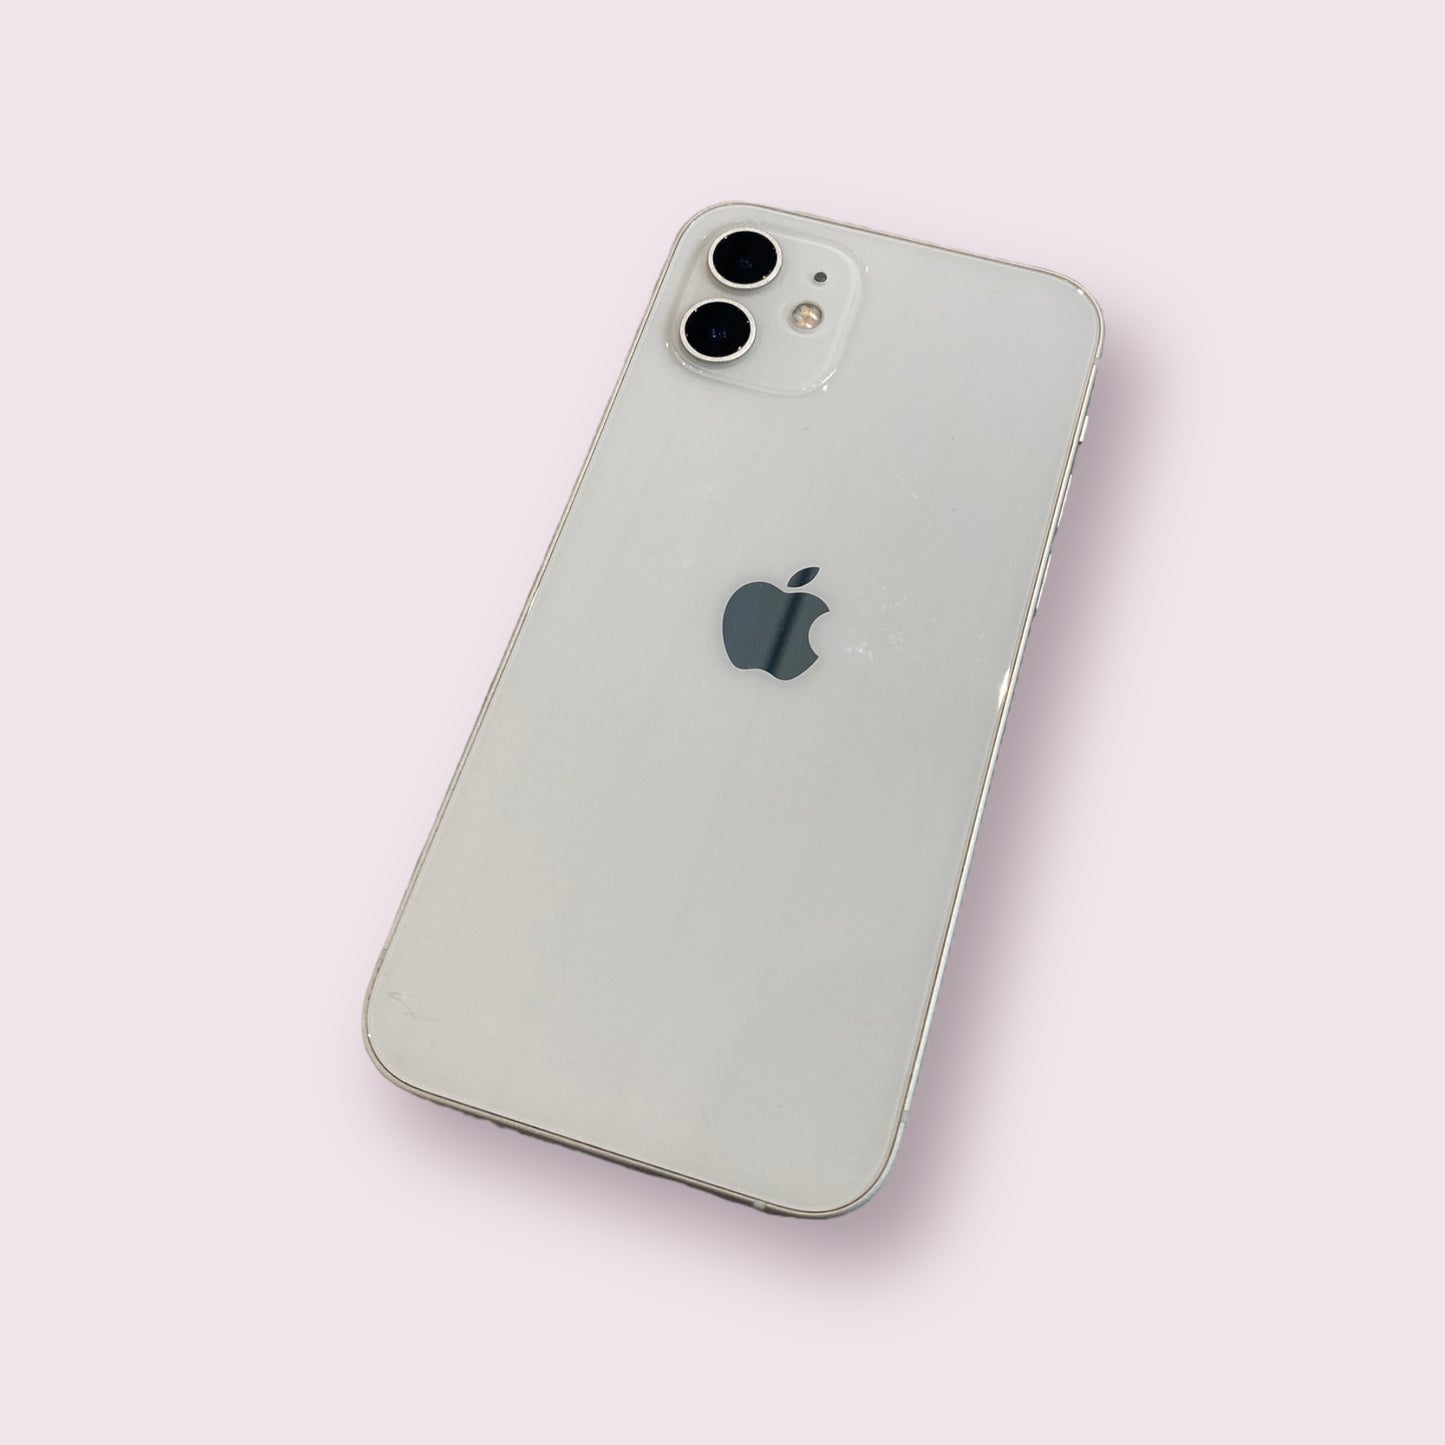 Apple iPhone 12 128GB White - Unlocked - Grade B